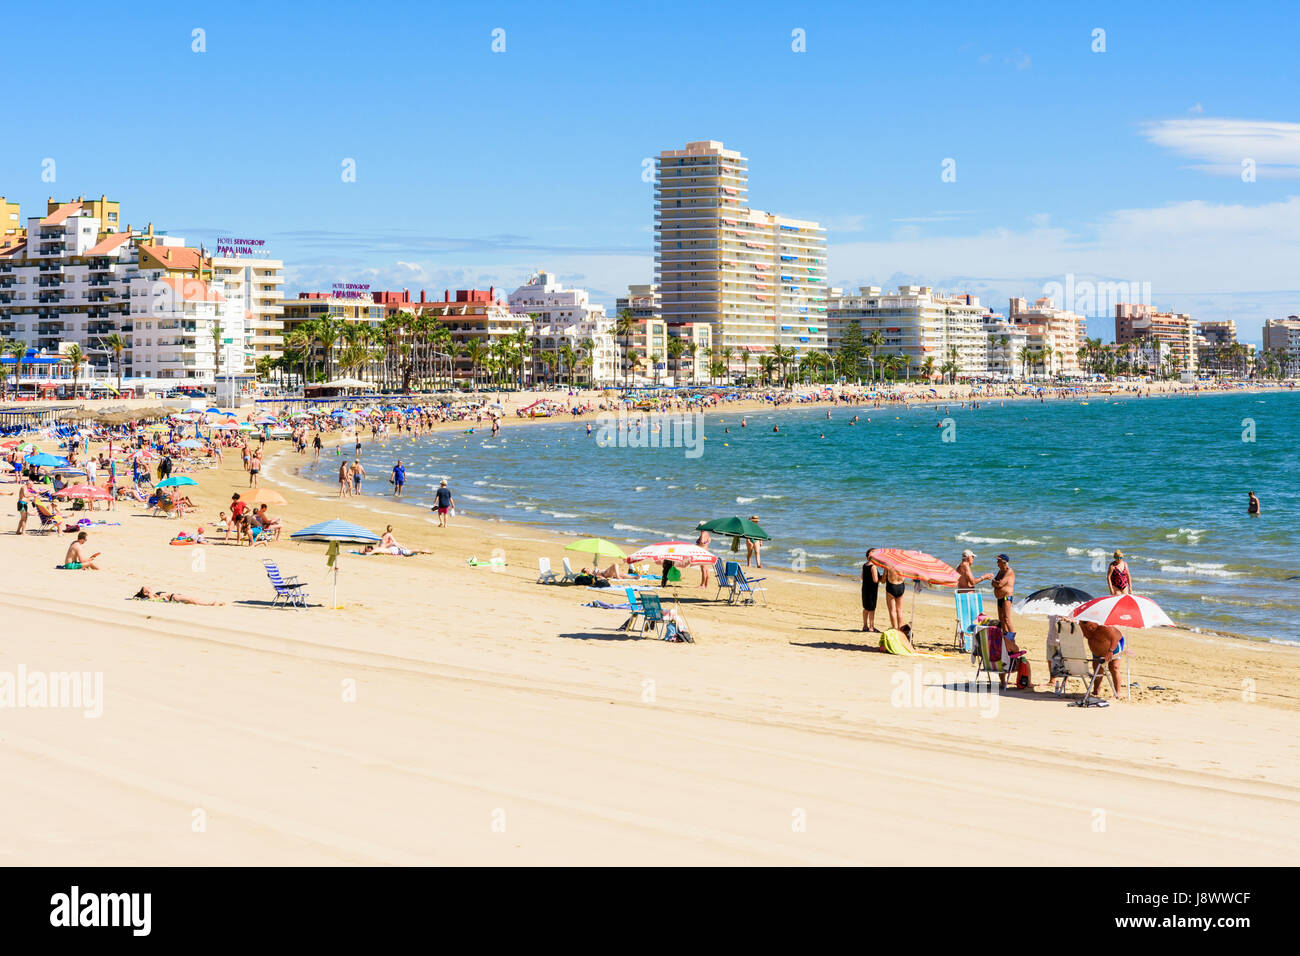 Crowded beach scene on popular soft sand of Playa Norte, Peniscola, Spain Stock Photo